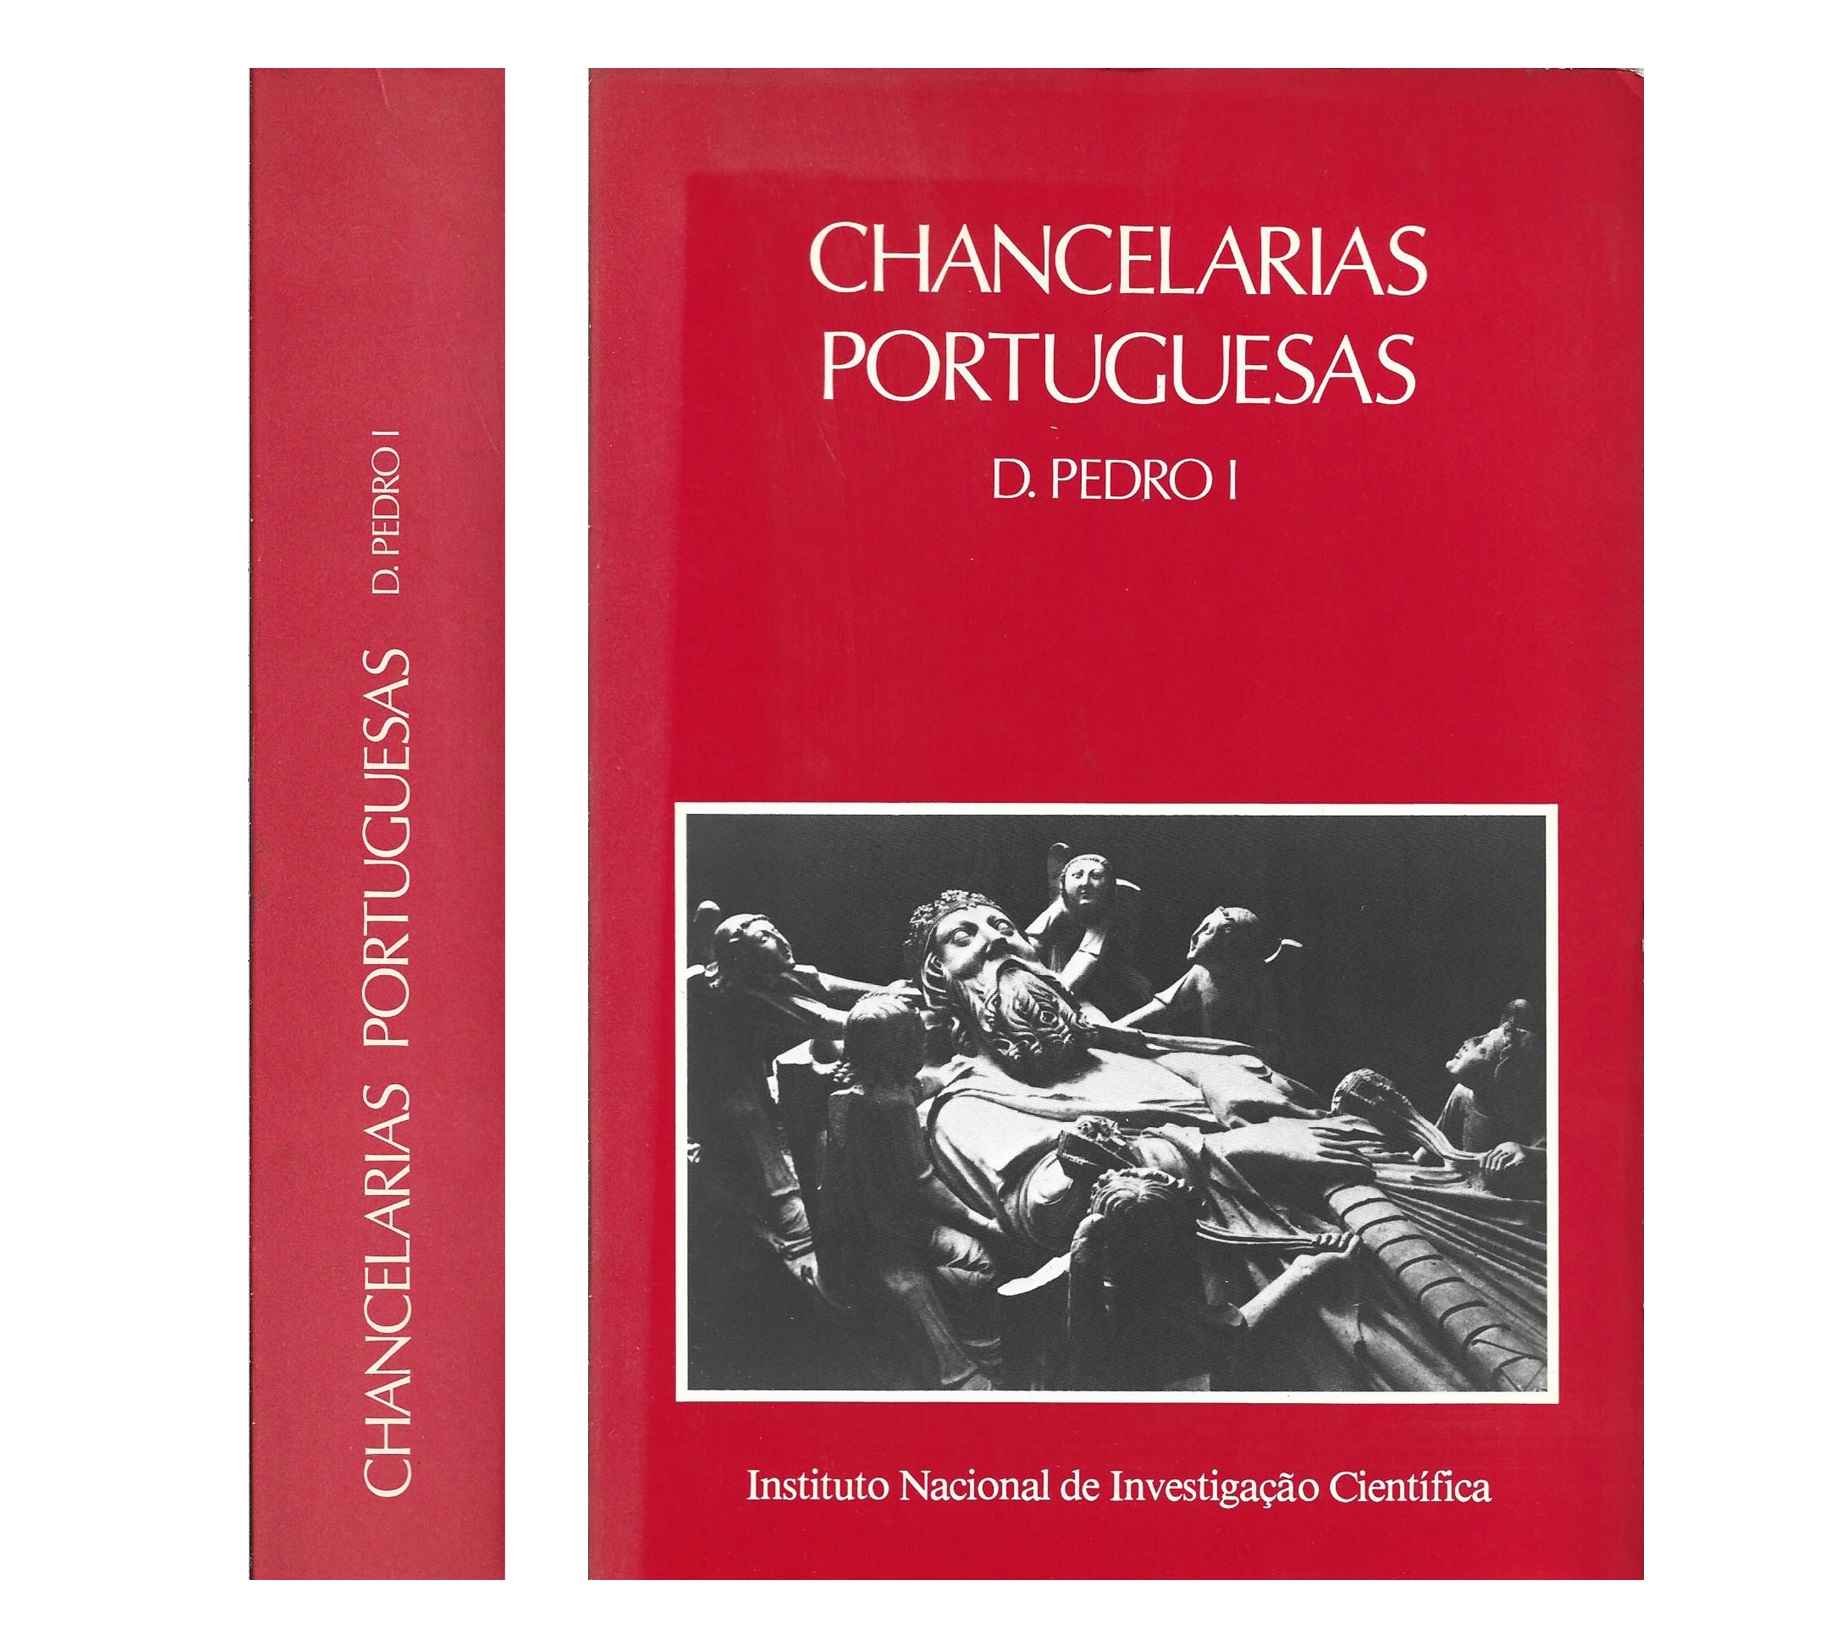 CHANCELARIAS PORTUGUESAS: D. PEDRO I